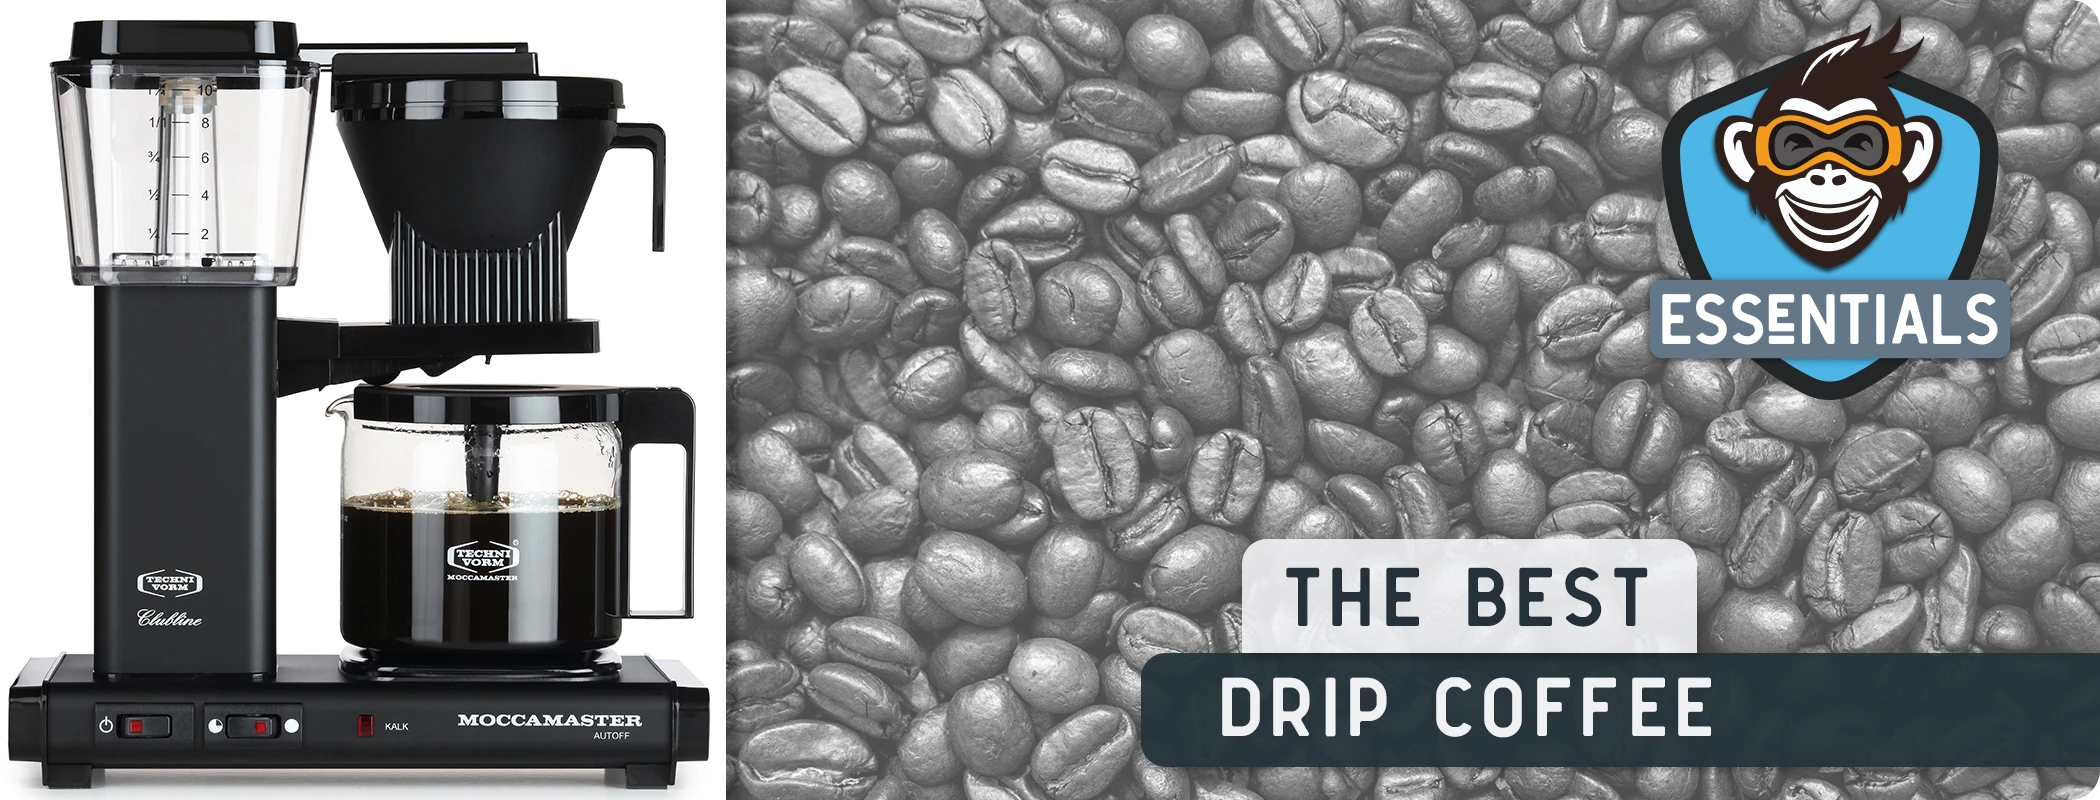 Drip Coffee Essentials